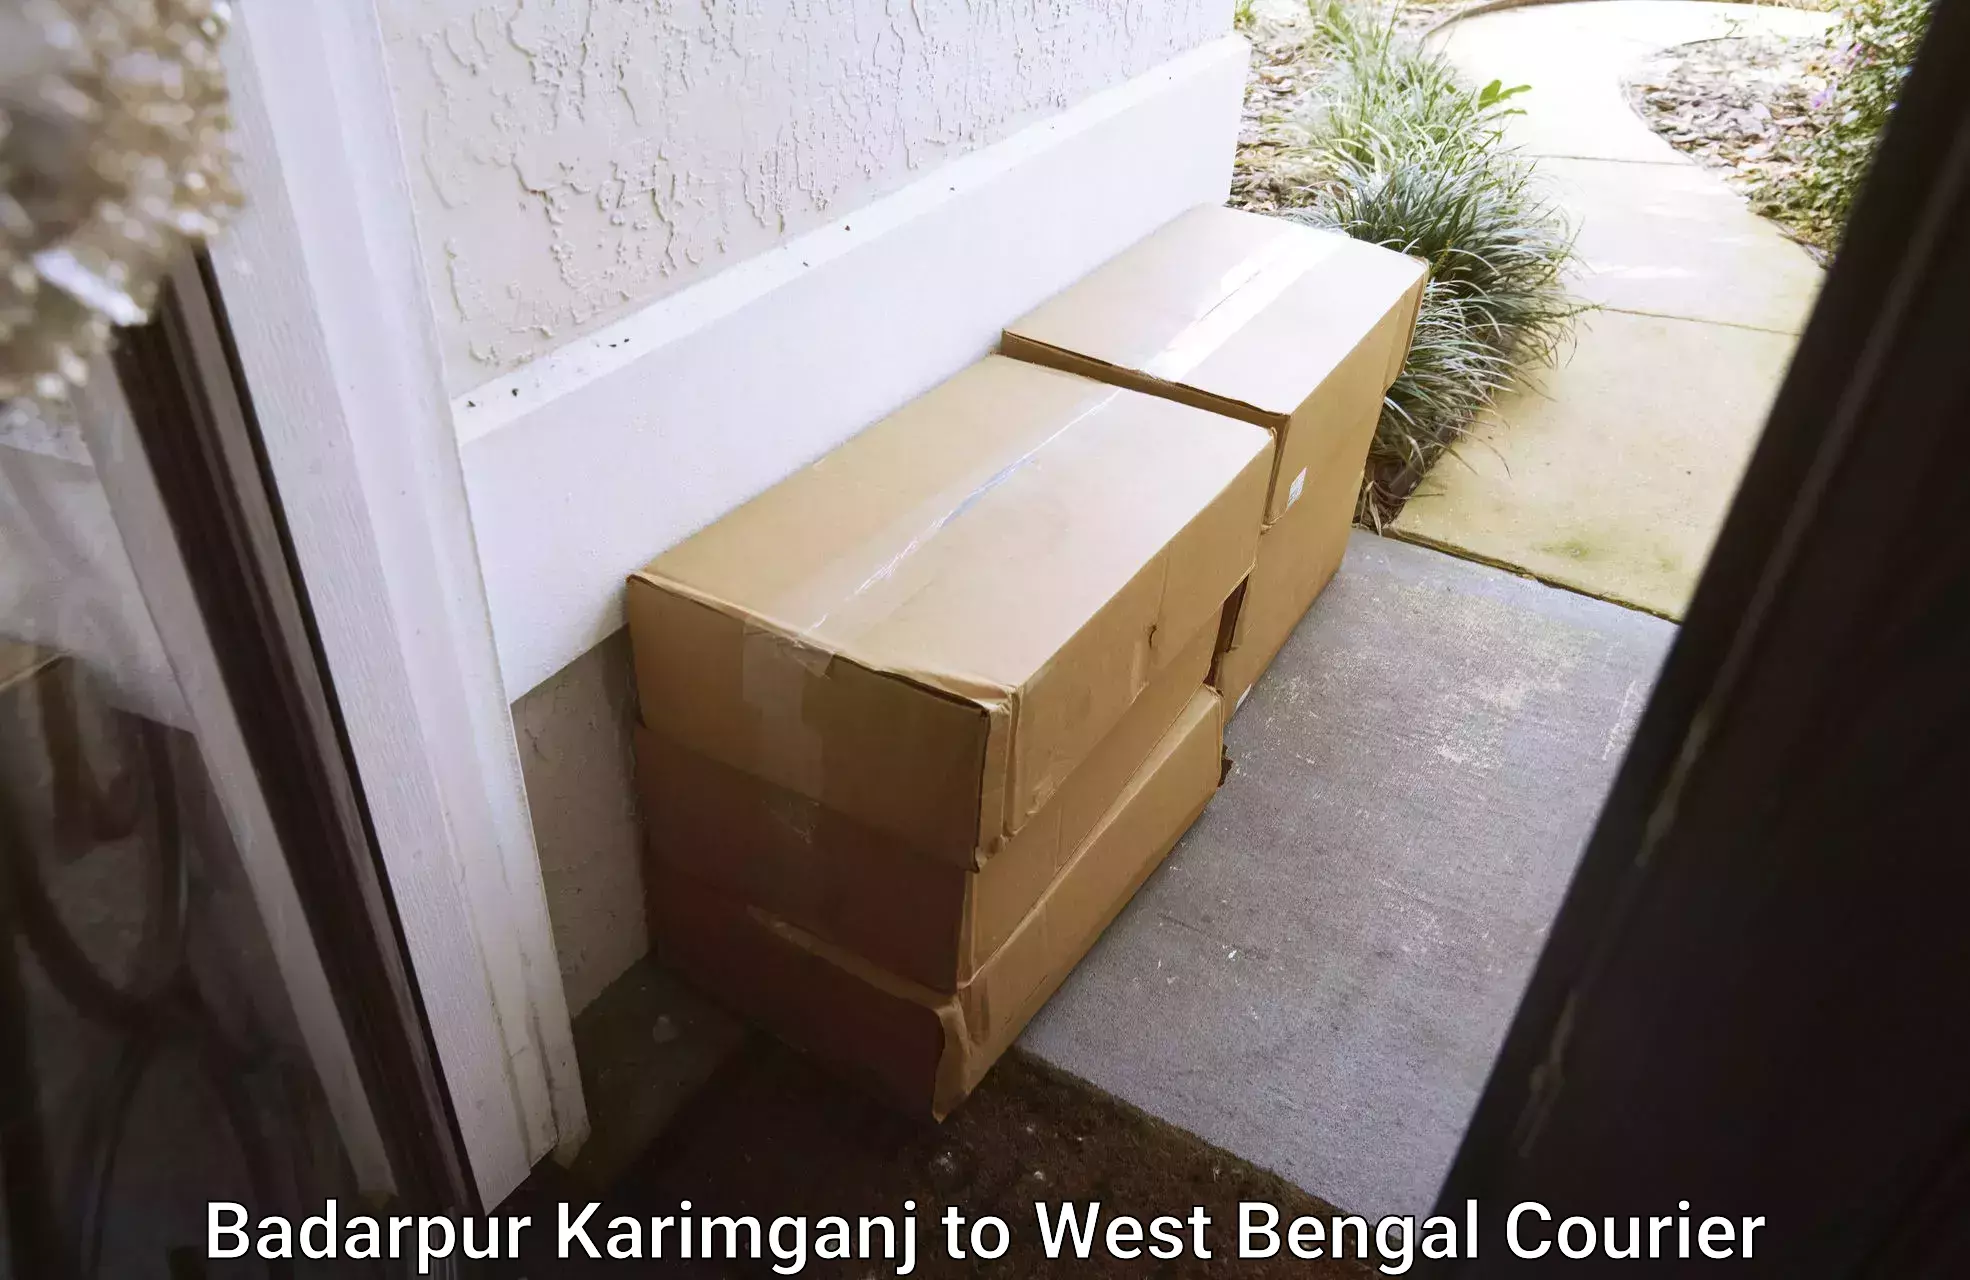 Subscription-based courier Badarpur Karimganj to West Bengal